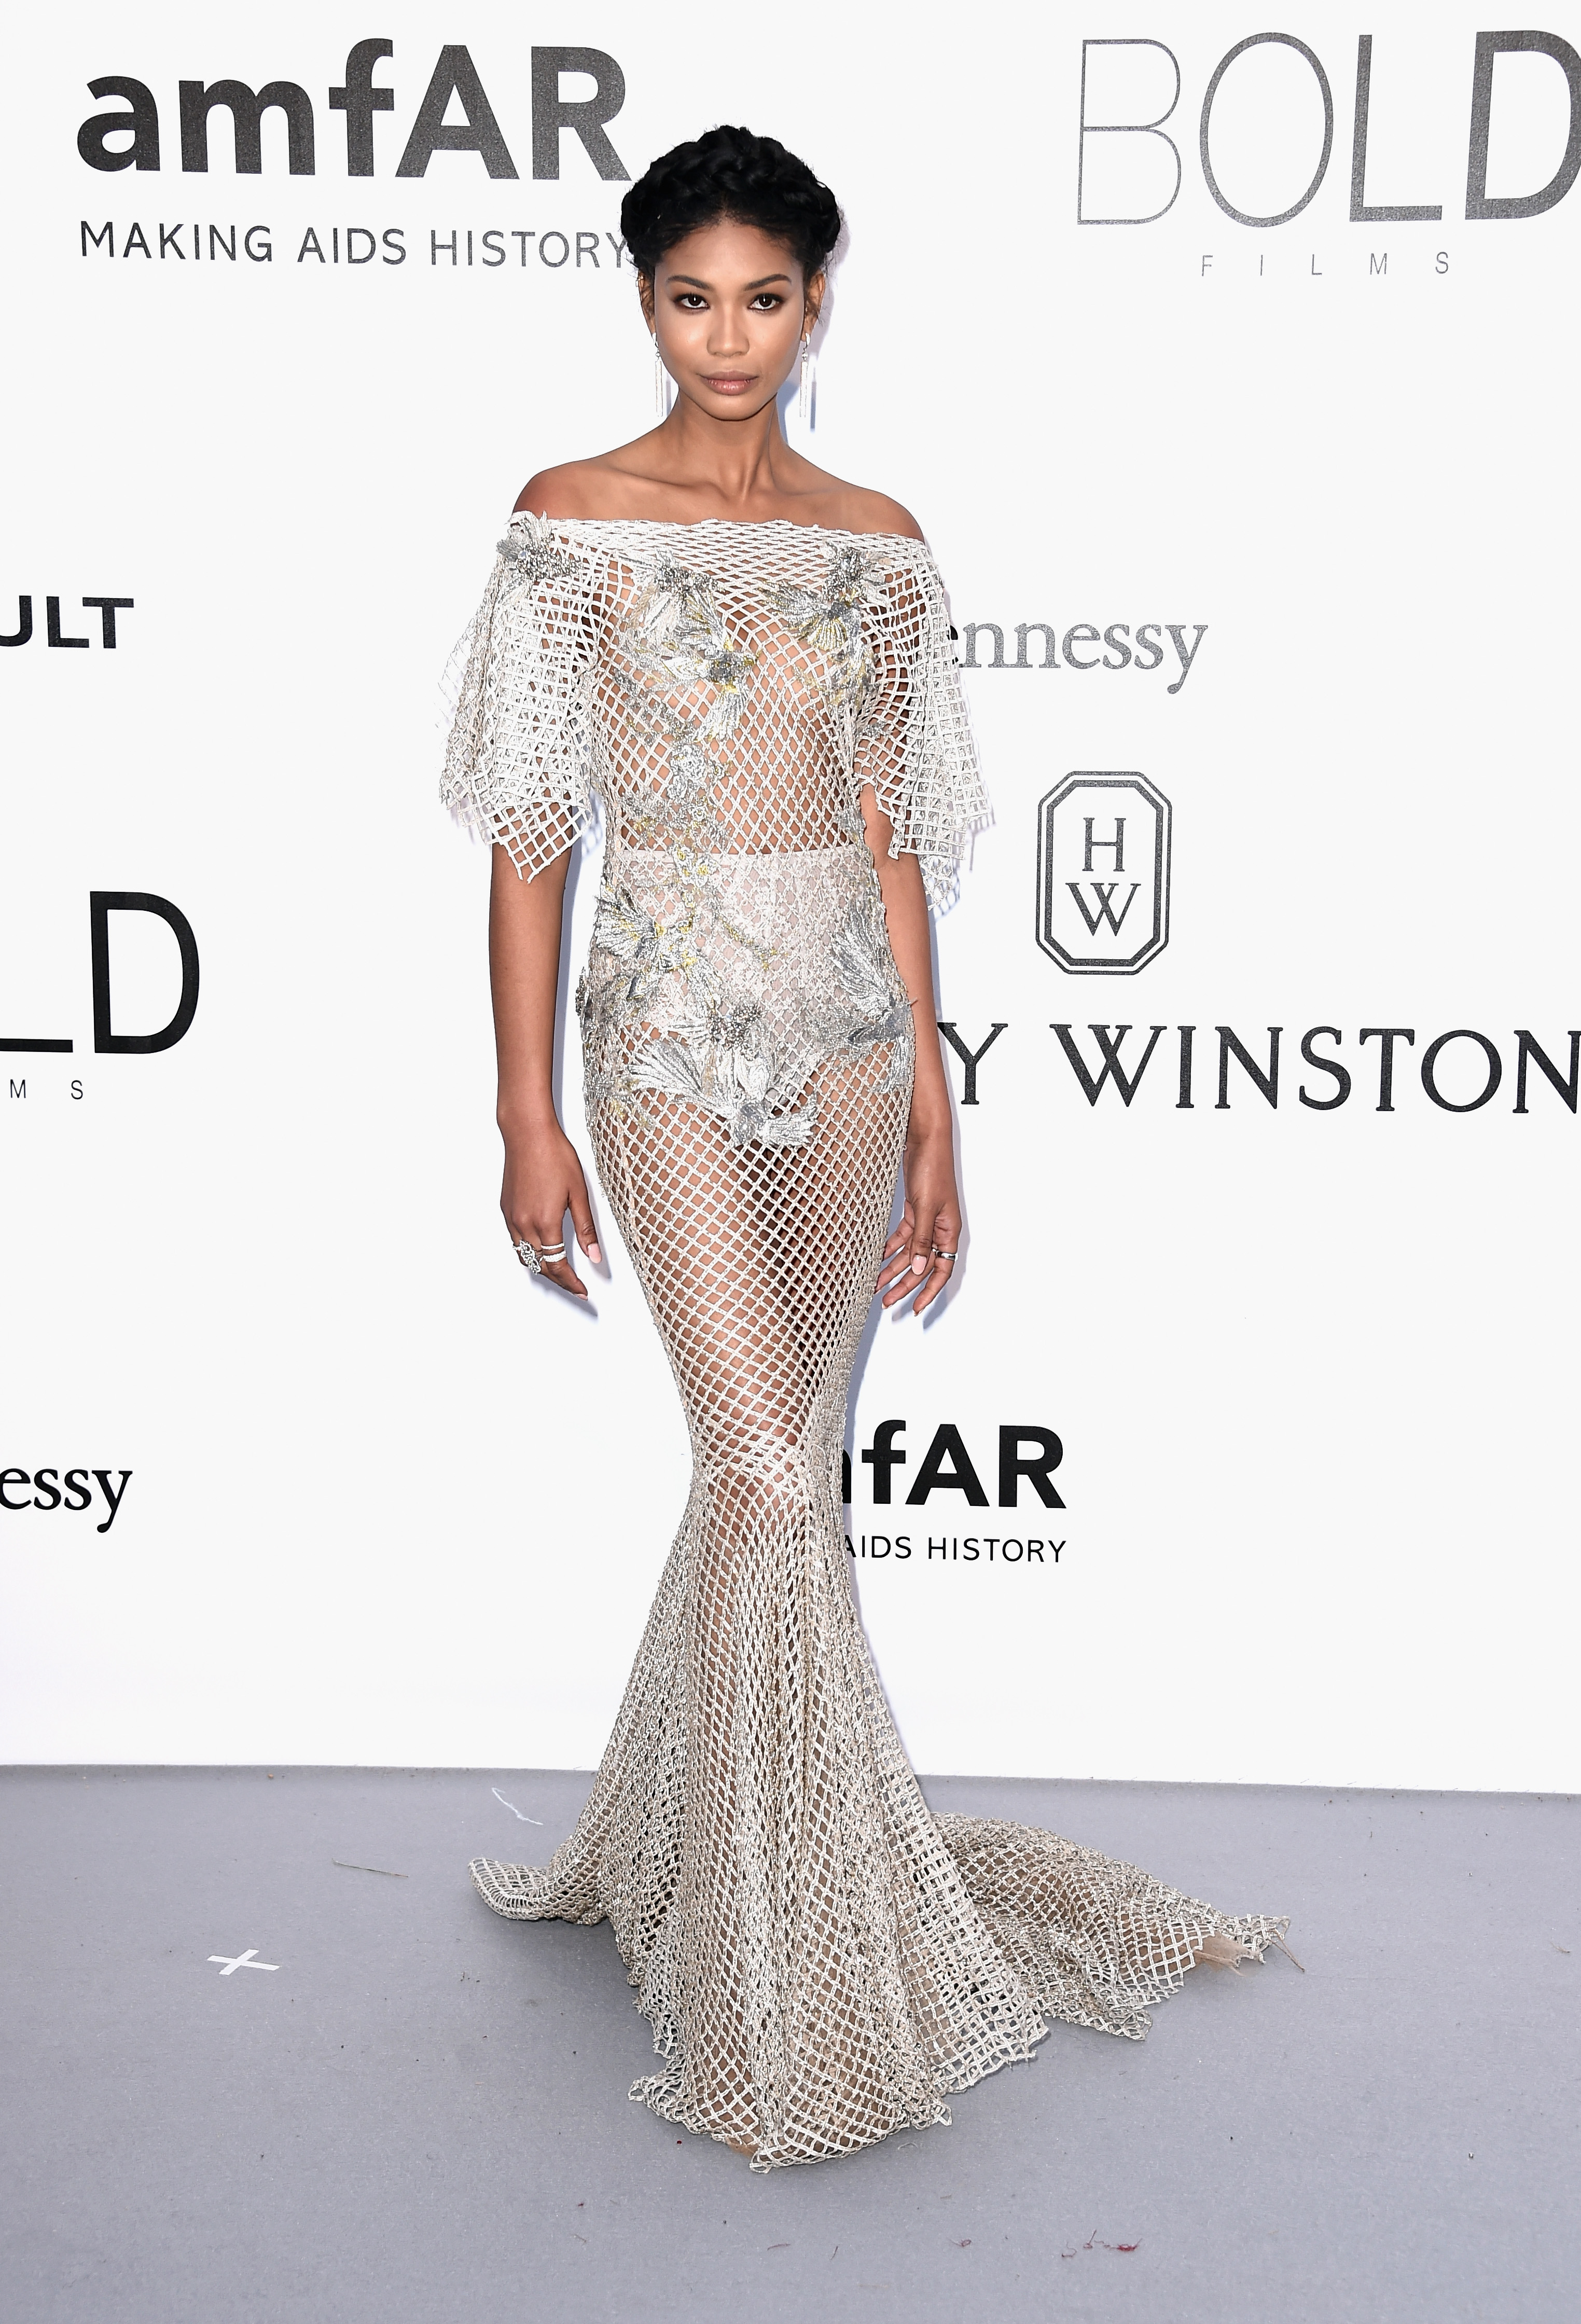 Chanel Iman Deep V-neck Long Sleeves Formal Ball Gown Cannes' amfAR Gala  TCD7032 - TheCelebrityDresses